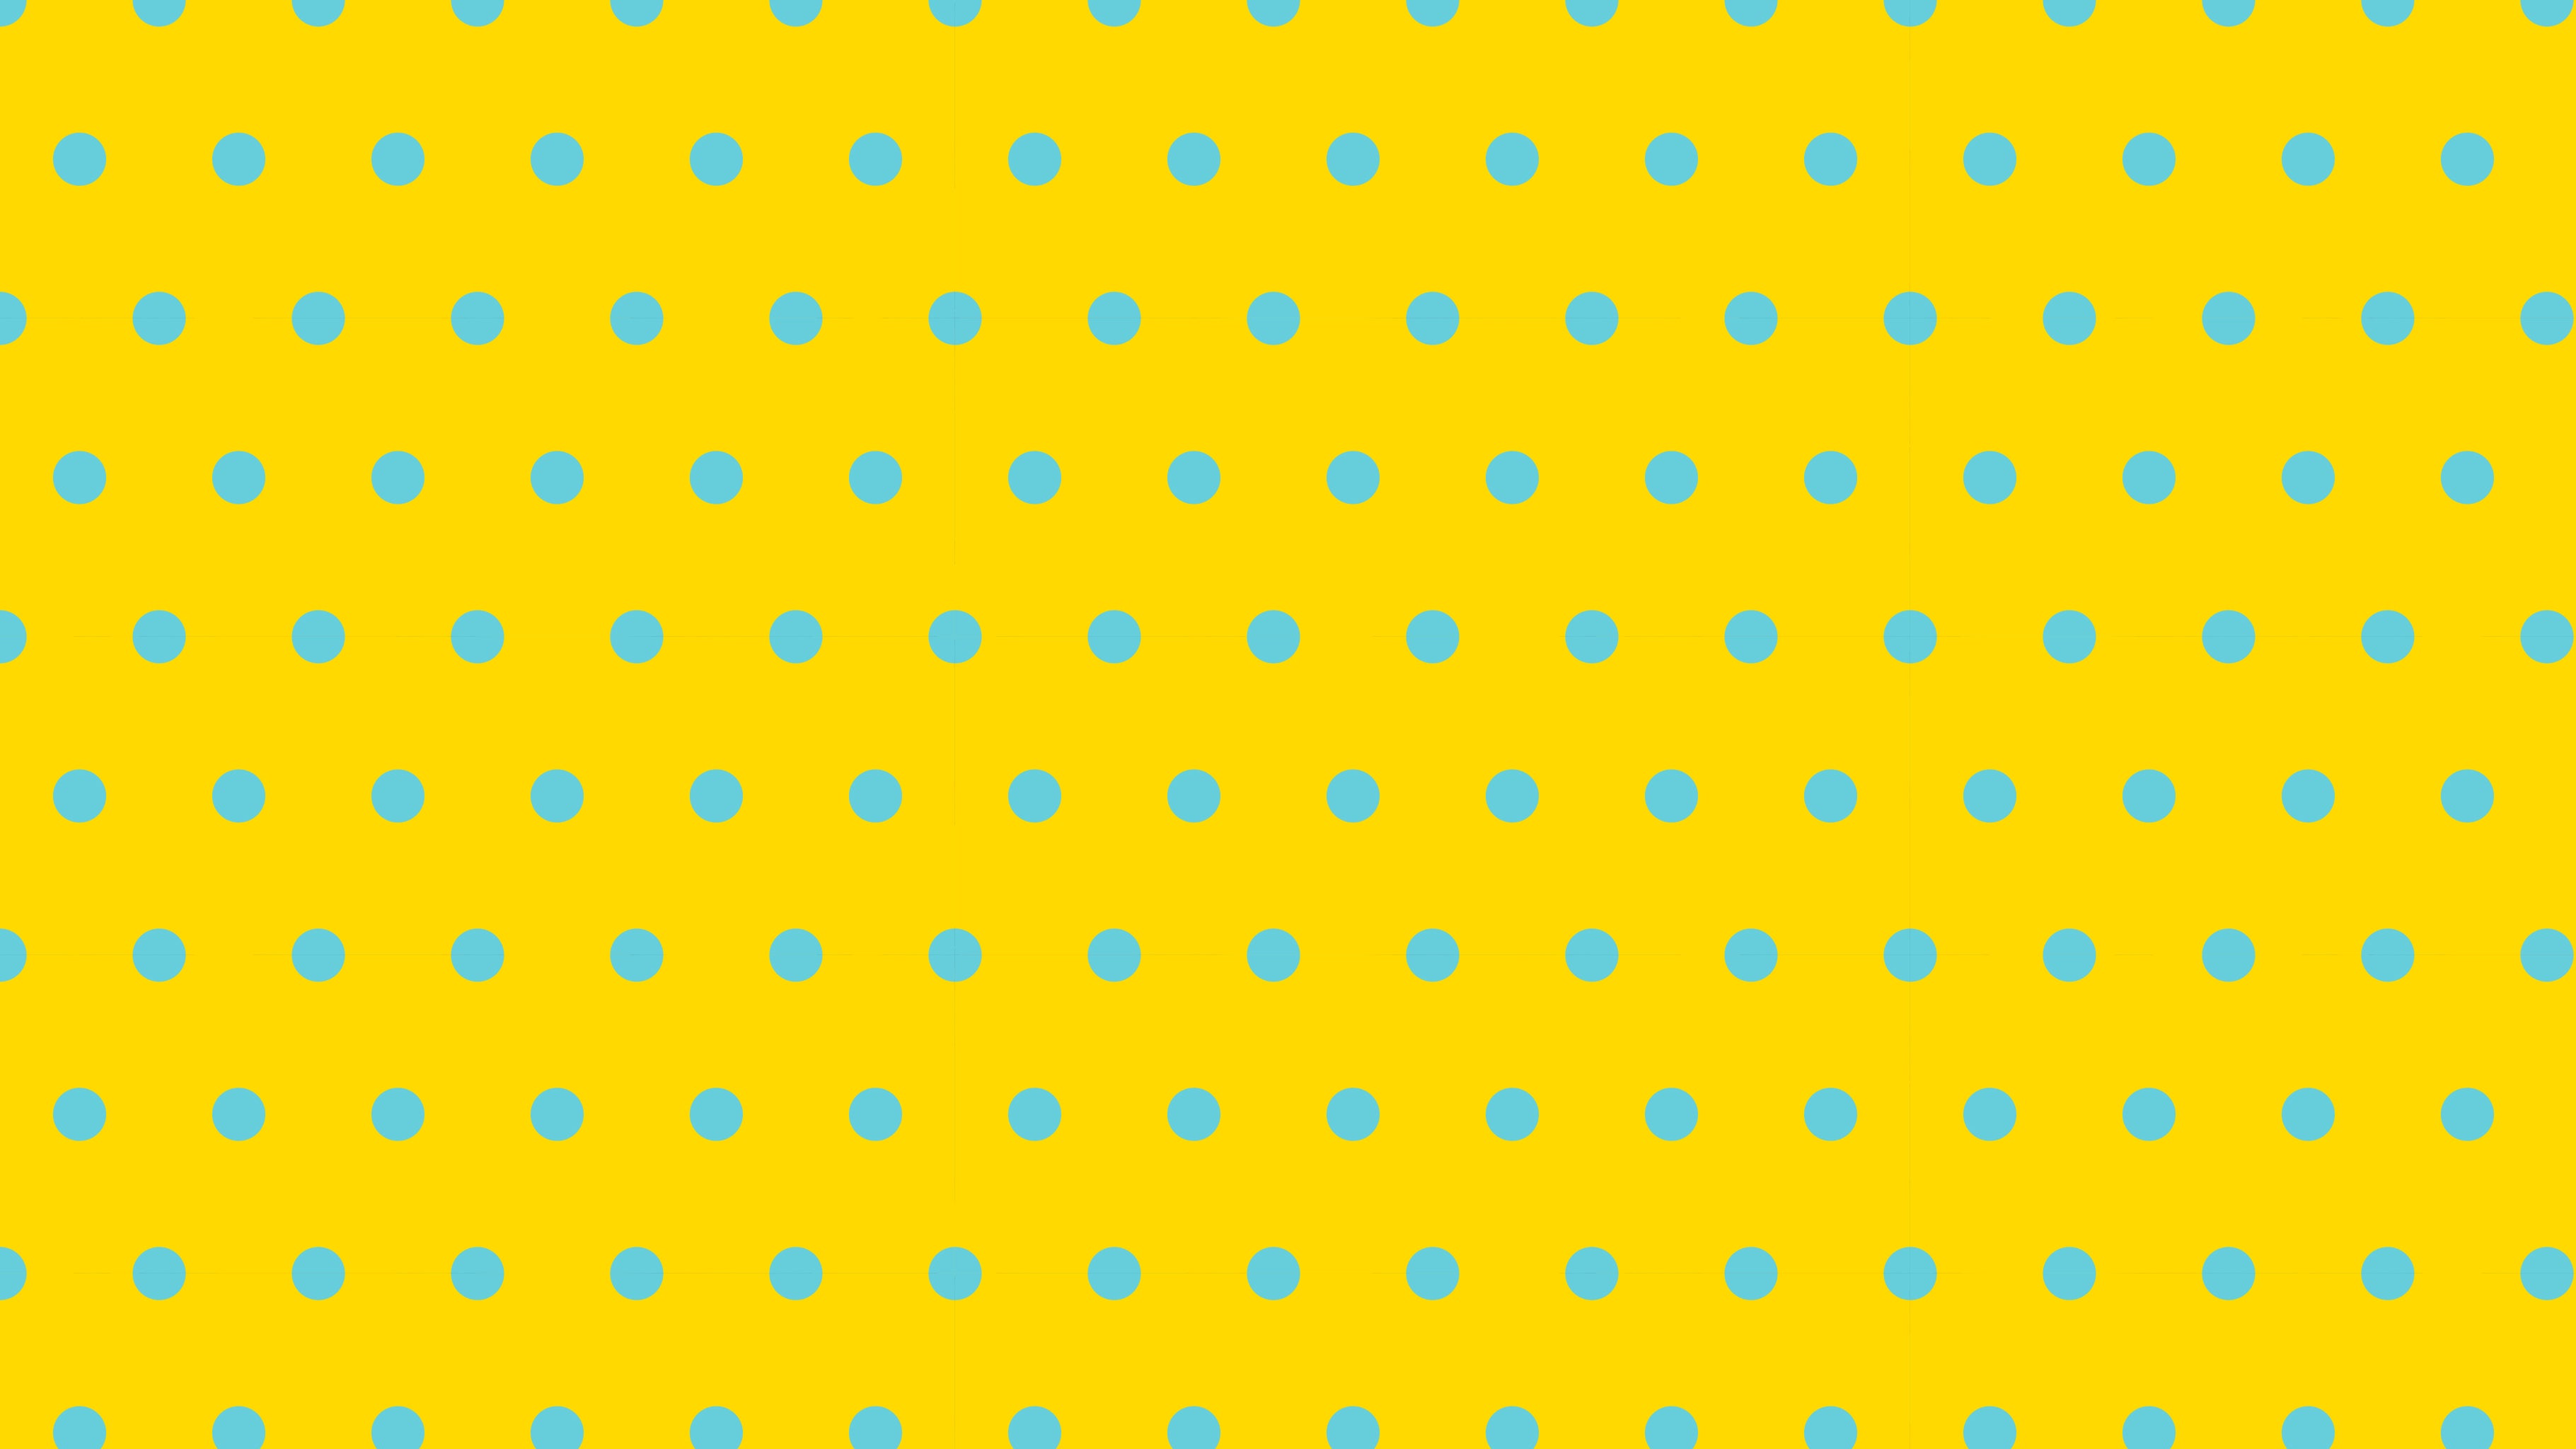 Aqua Dots on Yellow by Studio Ten Design